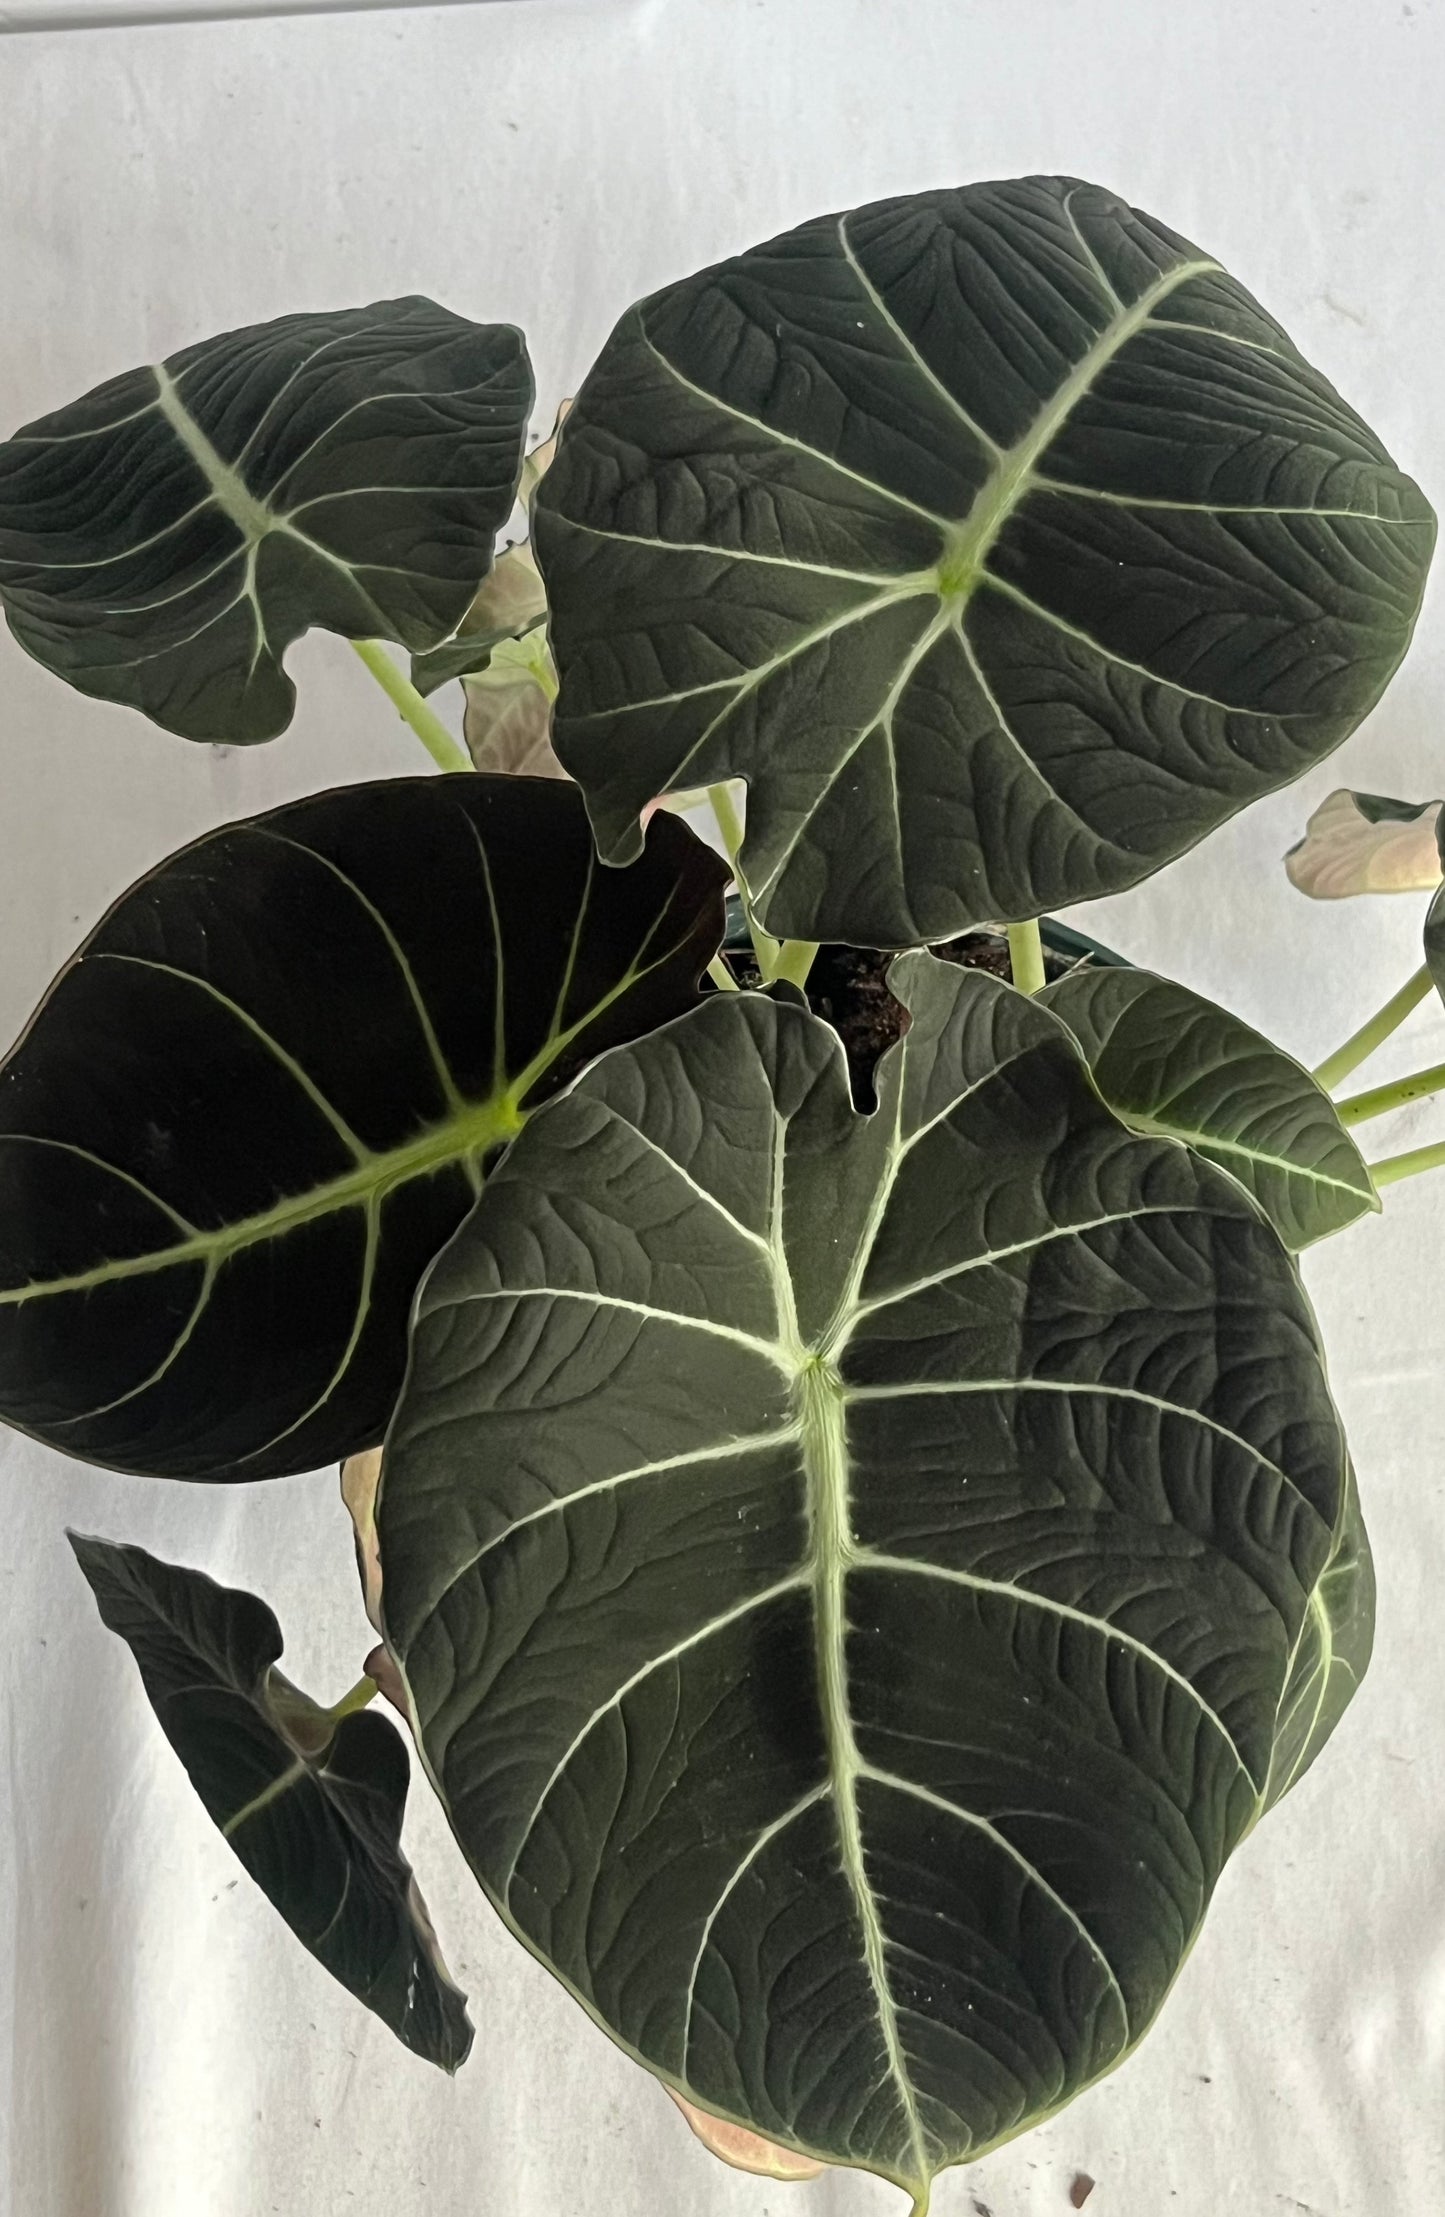 Alocasia Reginula 'Black Velvet' Plant -  Large, Velvetly, Black Leaves With Prominent Eye-Catching Veins- Tropical Houseplant (4" or  6" Pot)